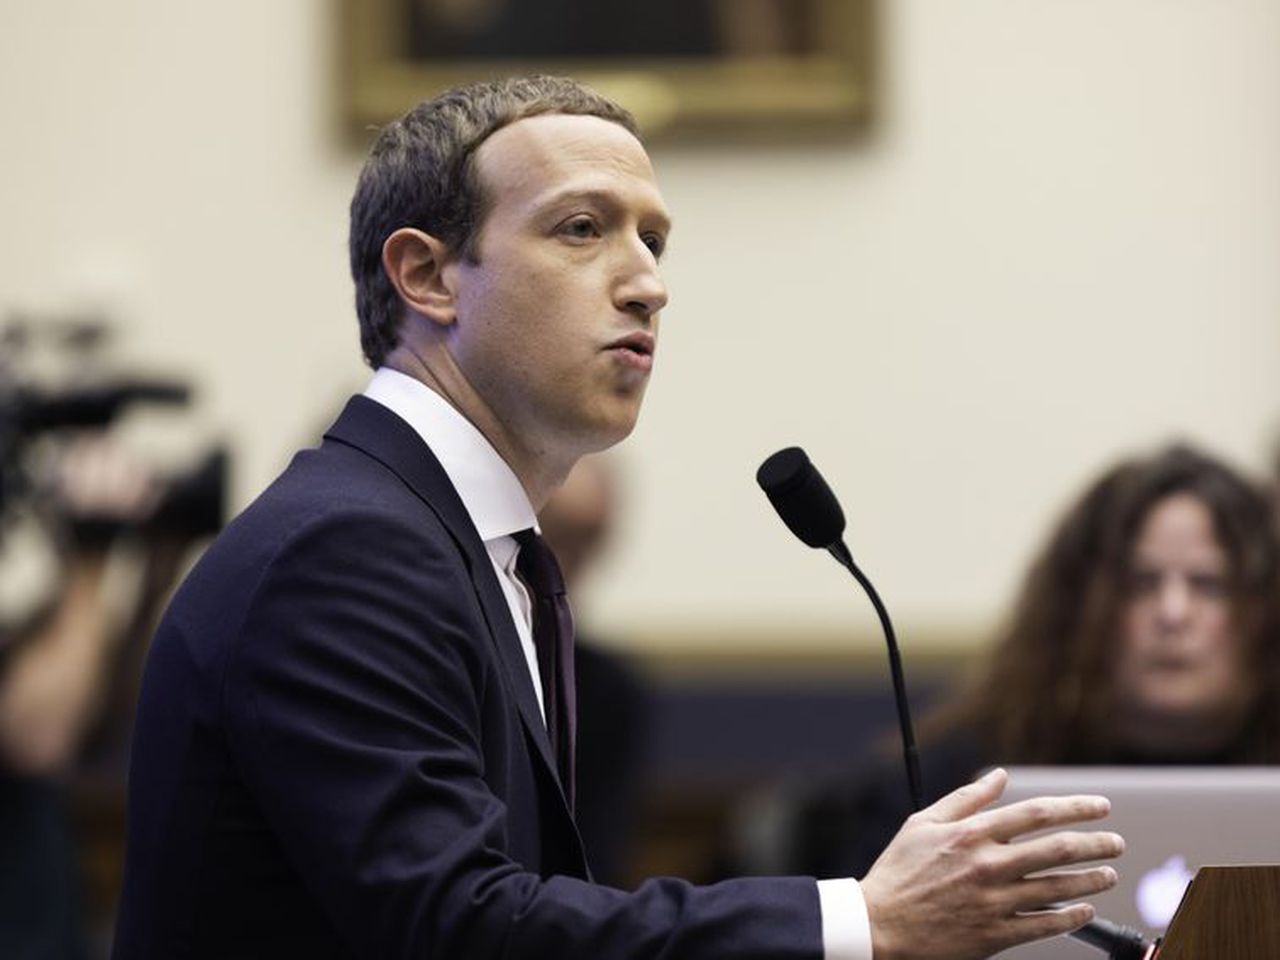 Zuckerberg, Bezos, Cook and Pichai antitrust hearing officially postponed